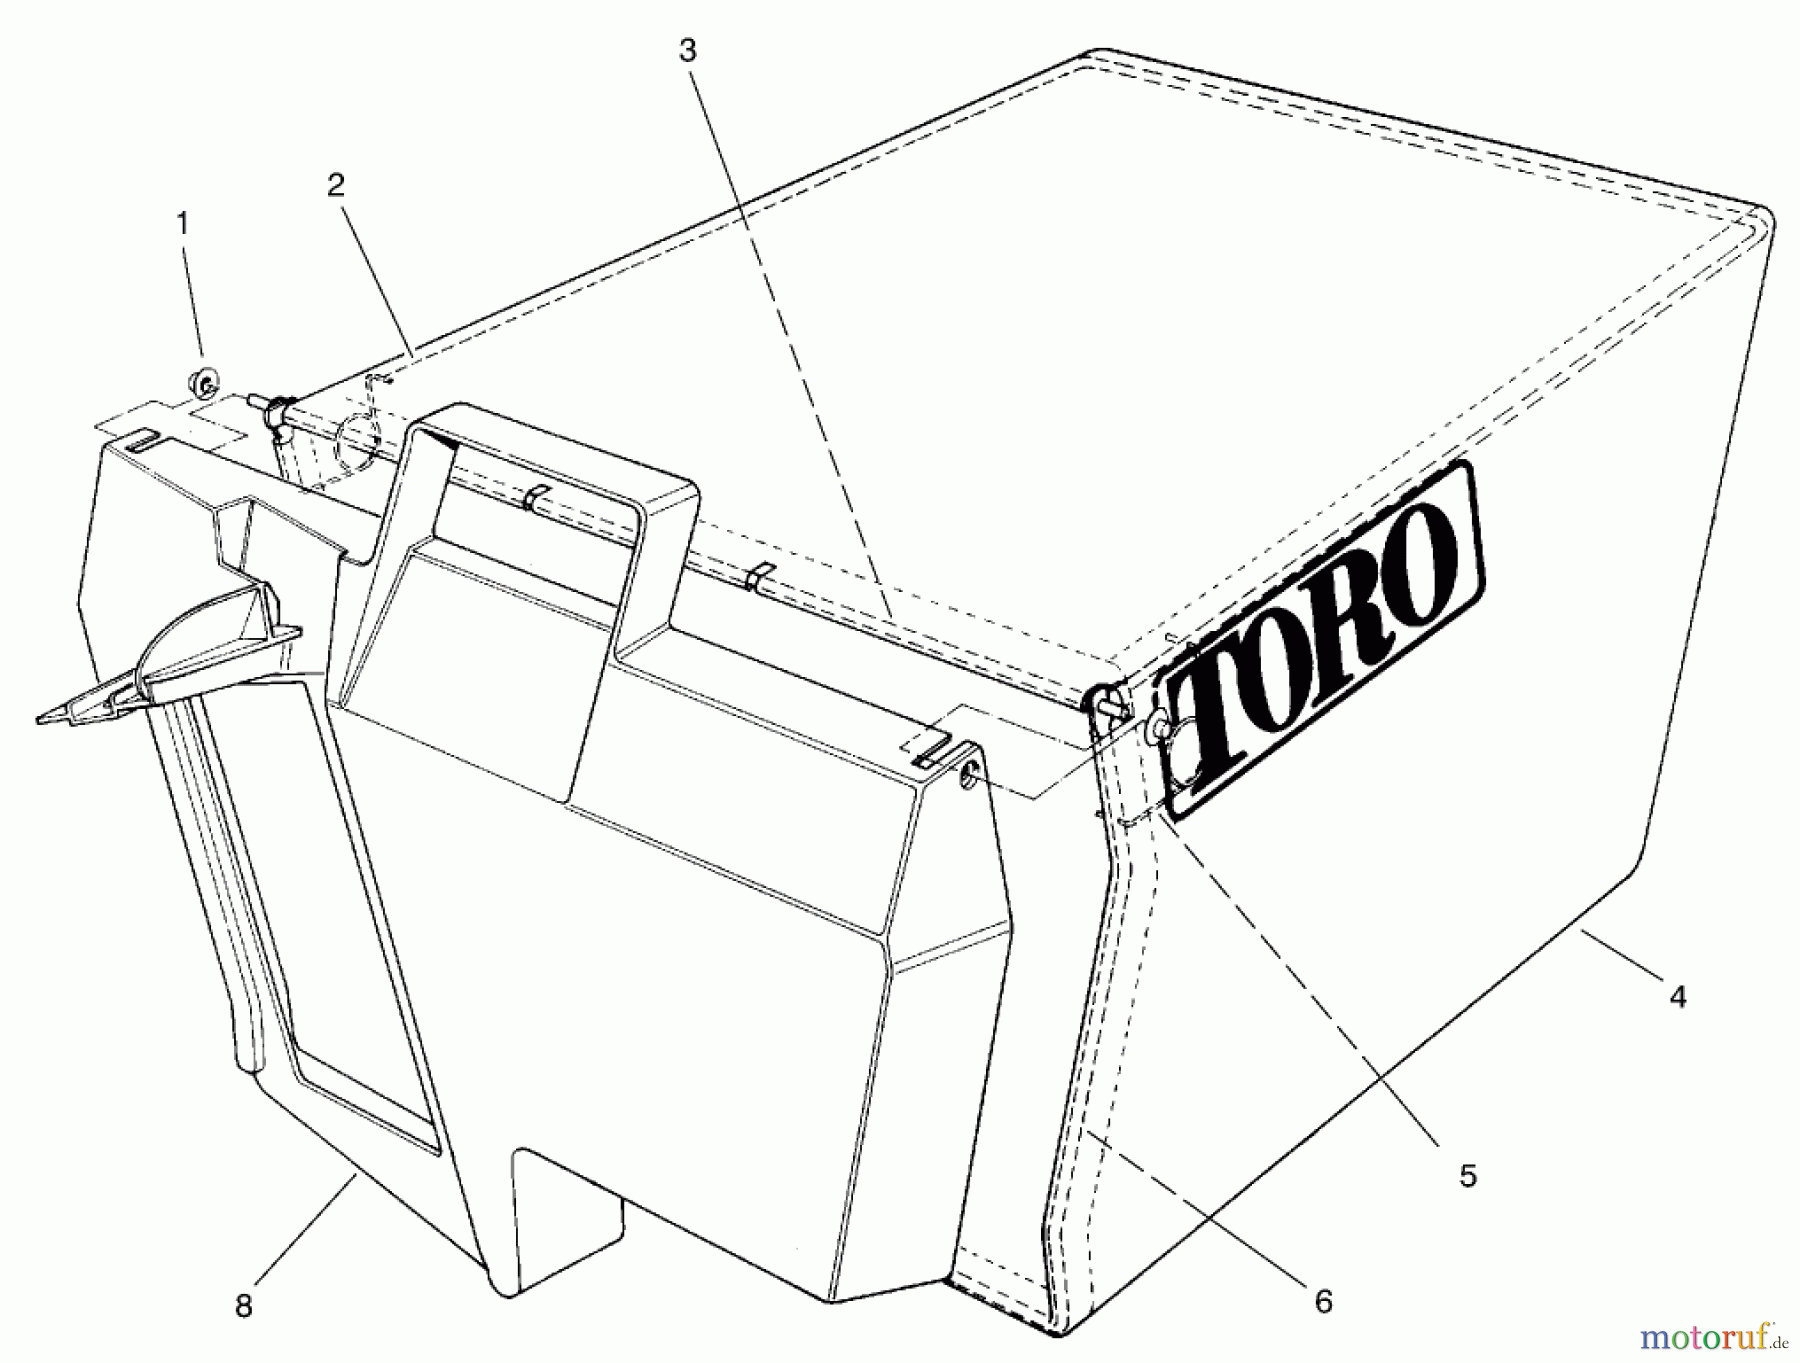  Toro Neu Accessories, Mower 59194 - Toro Rear Bag Kit, 21